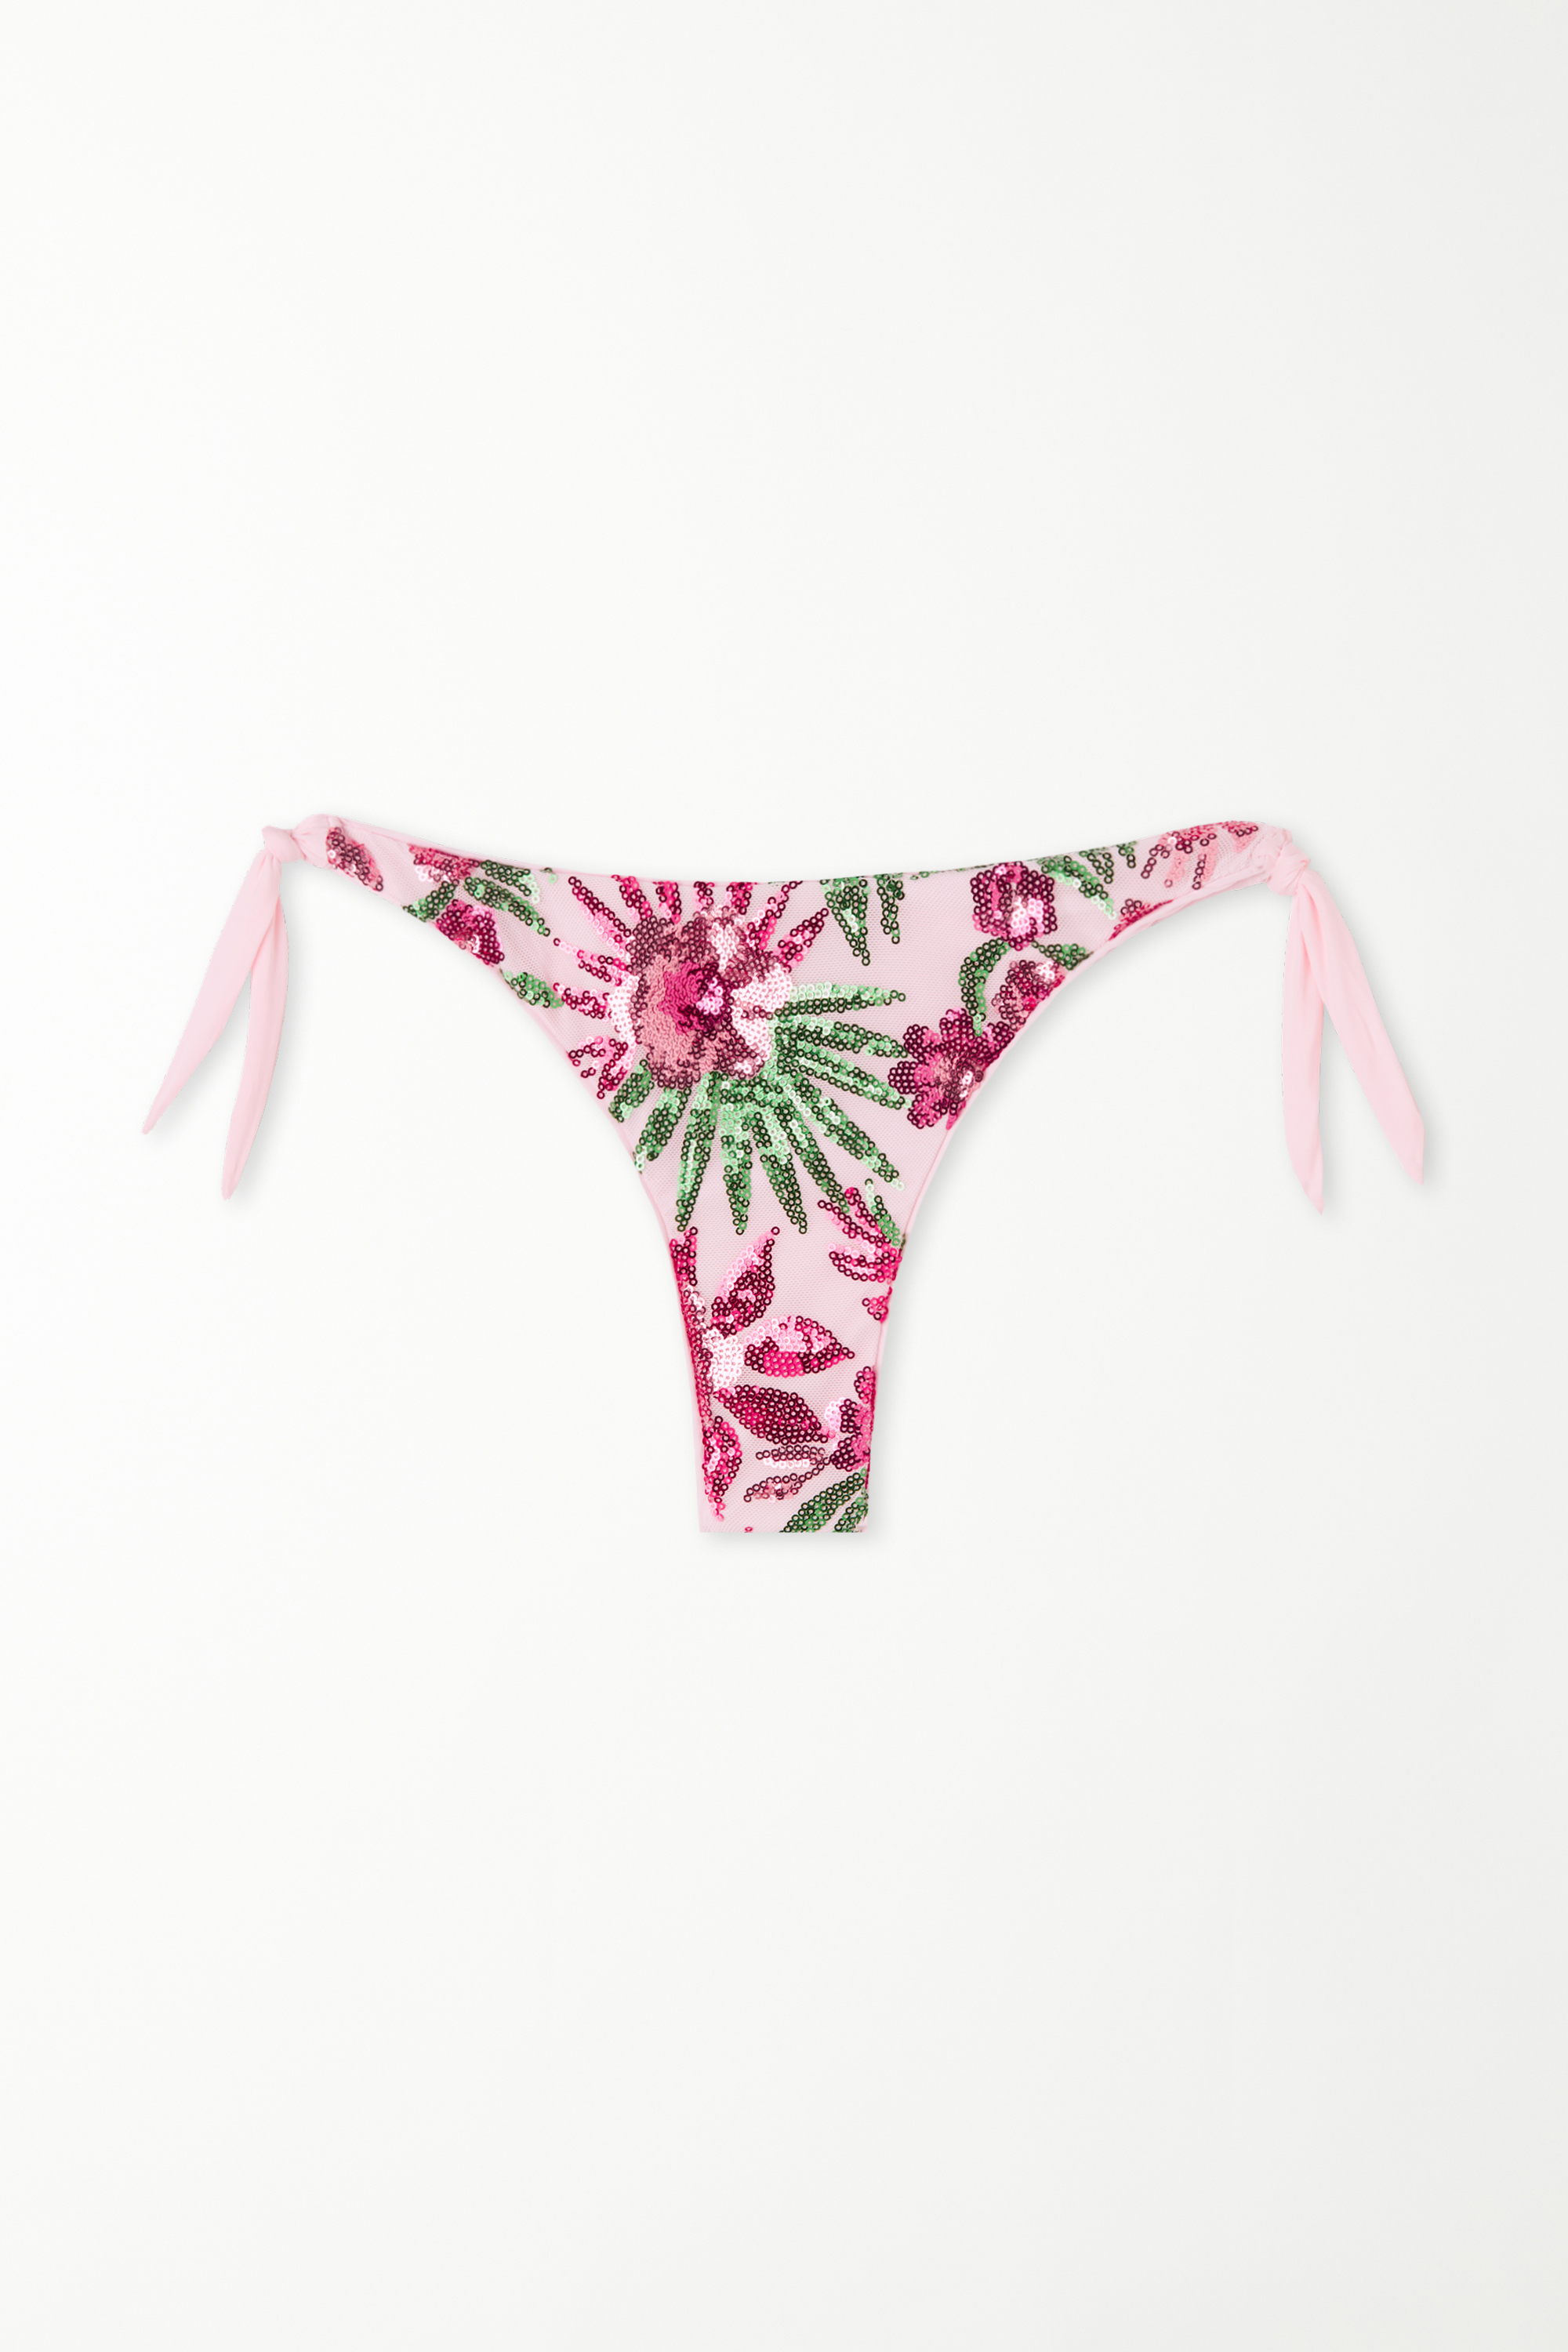 Flower Paradise Brazilian Bikini Bottoms with Ties